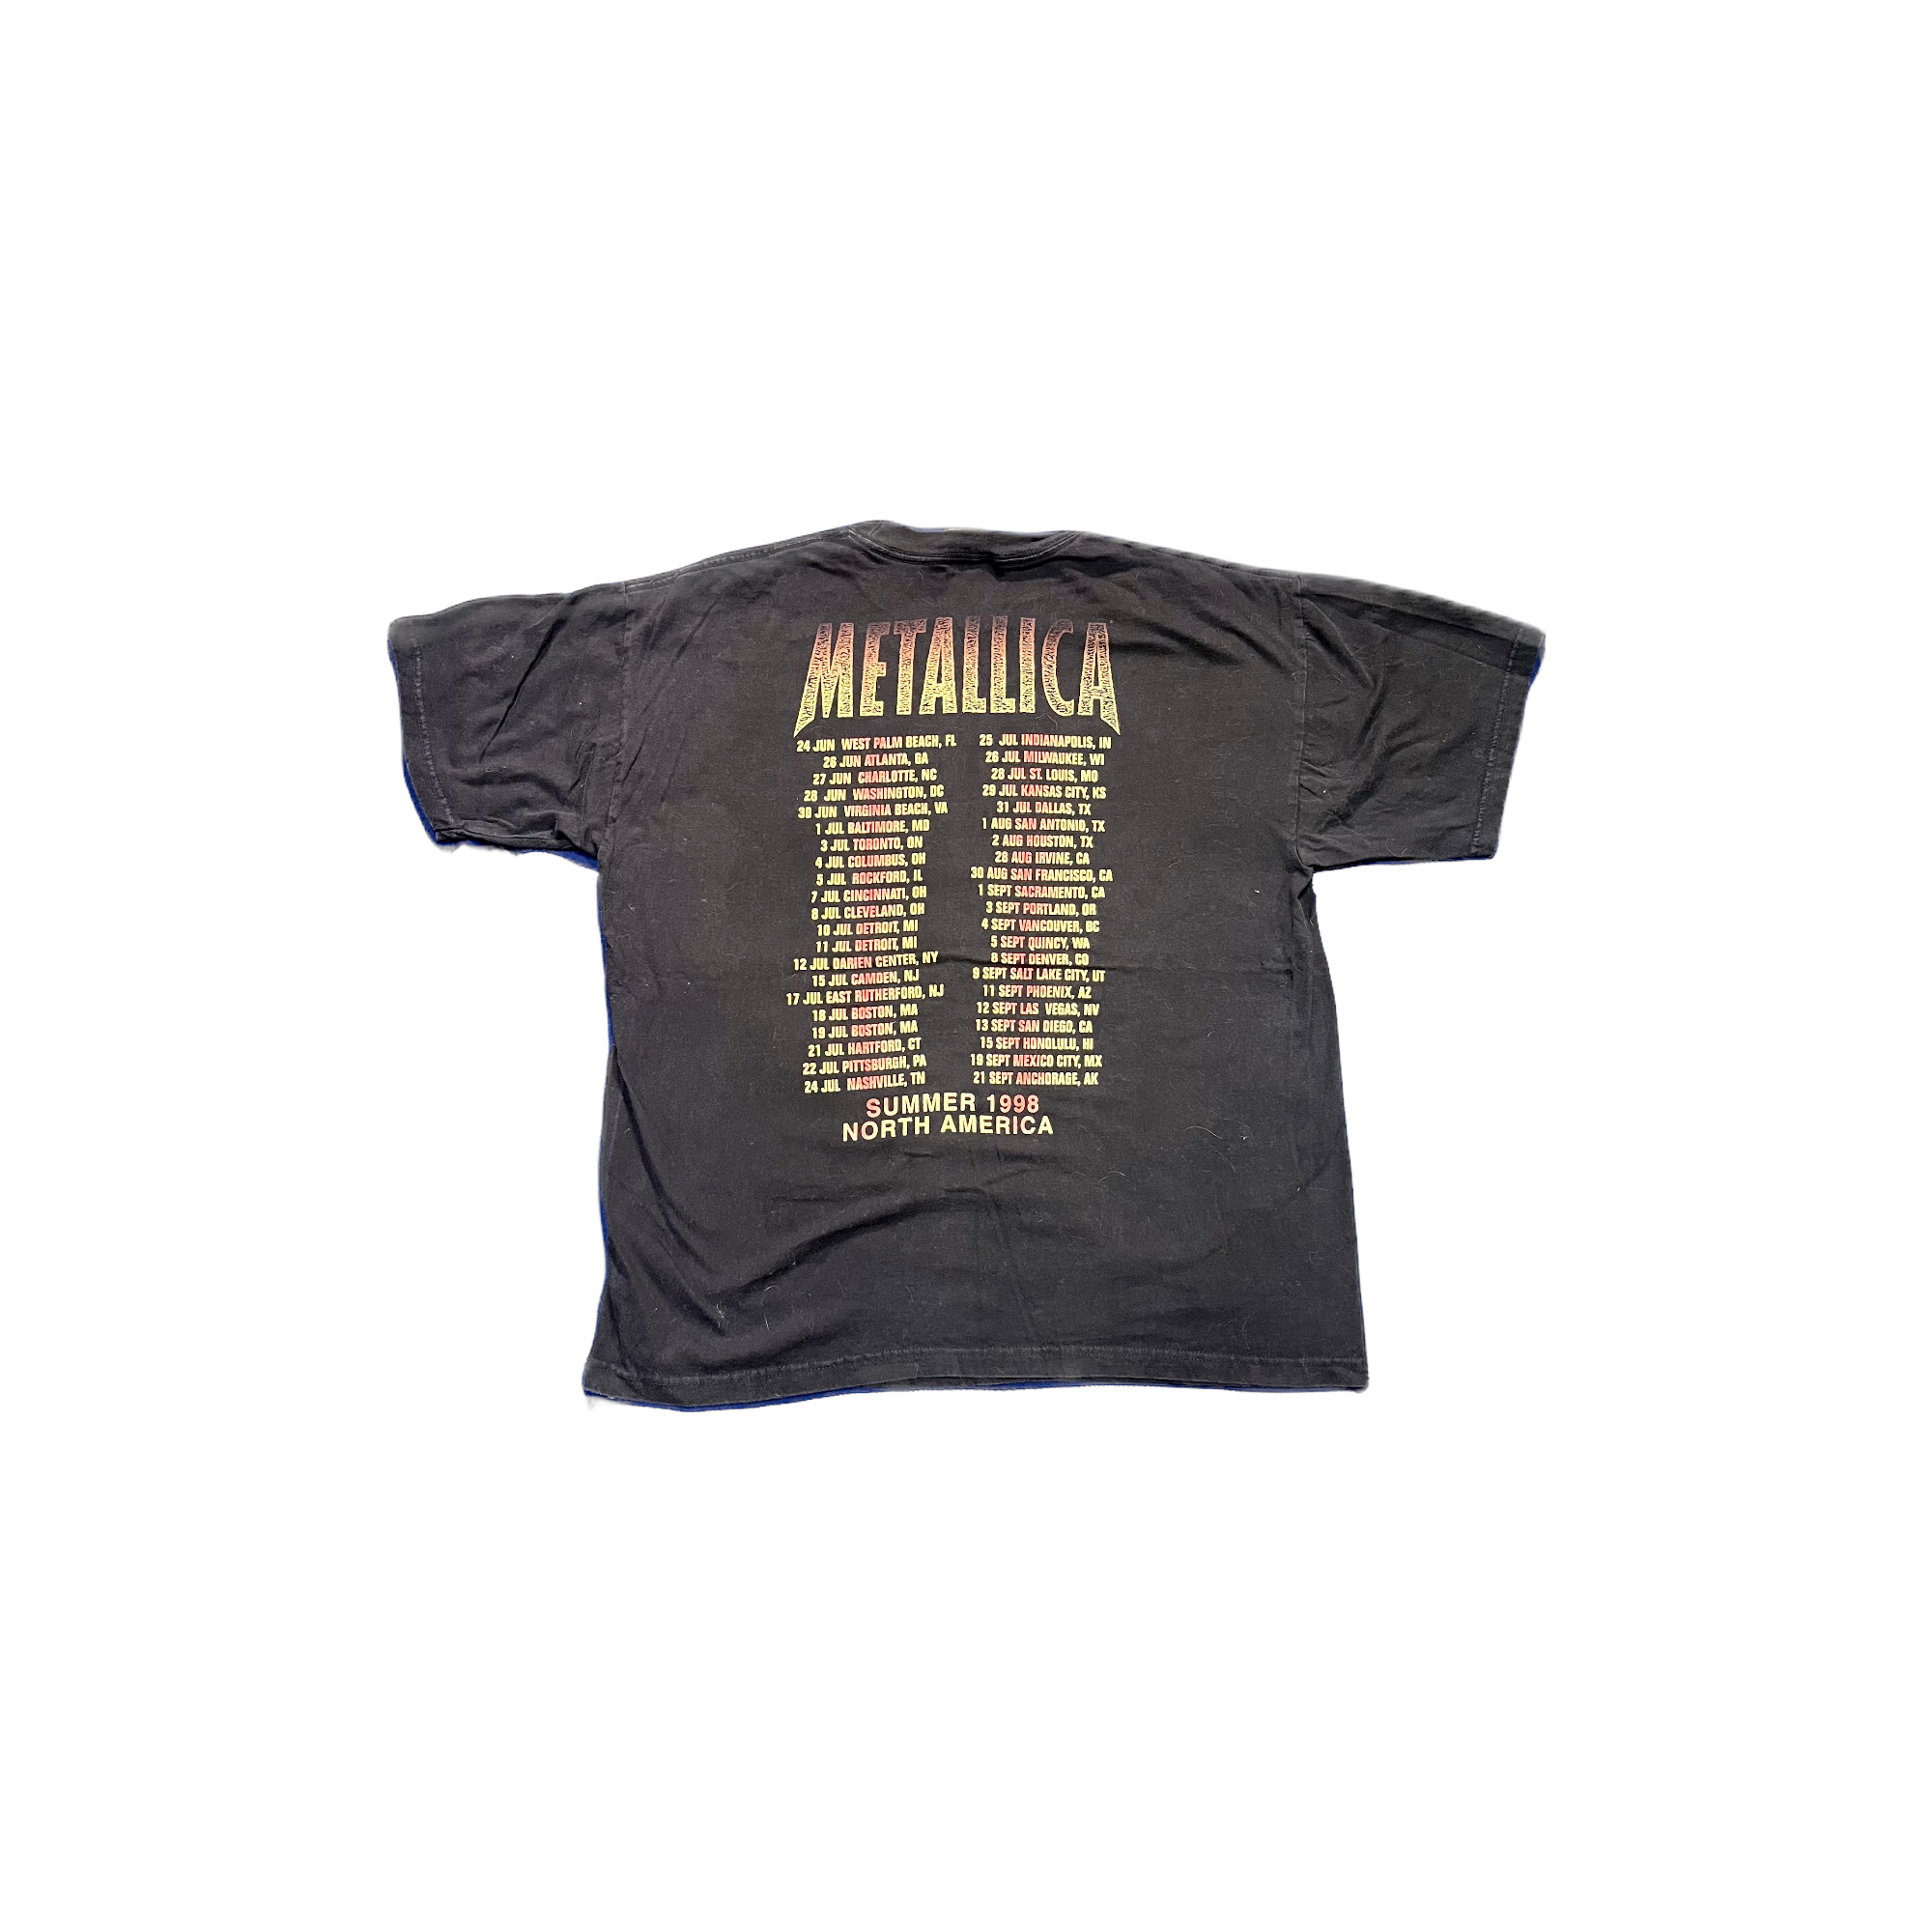 Vintage 1998 Metallica Tour Shirt (extra large)